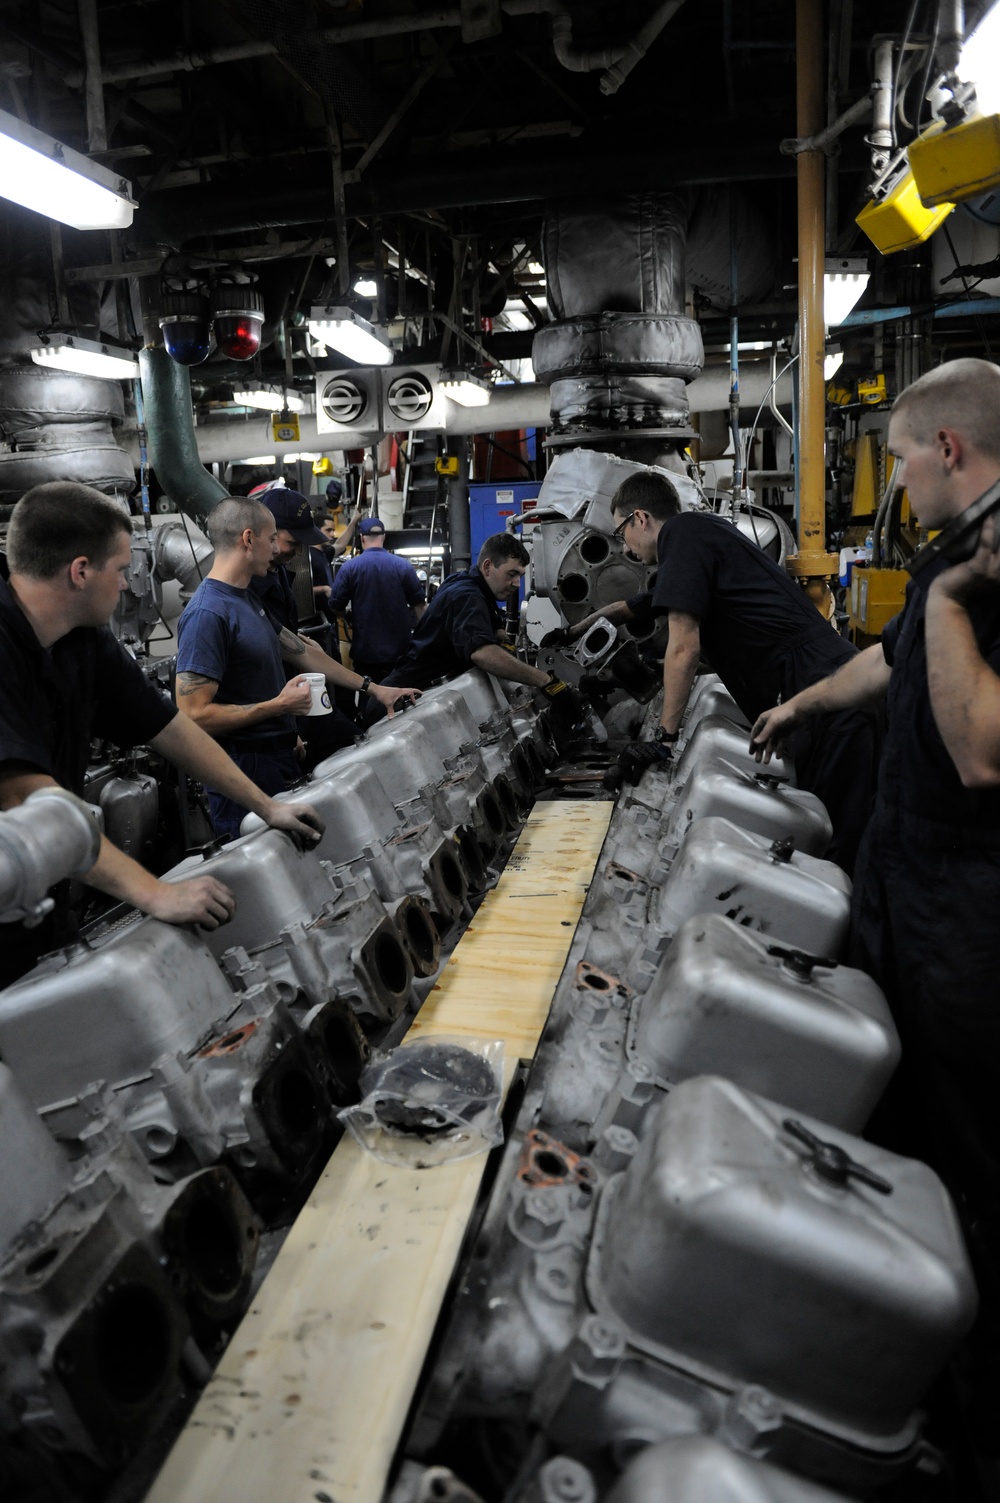 Engine work aboard the USCGC Tampa